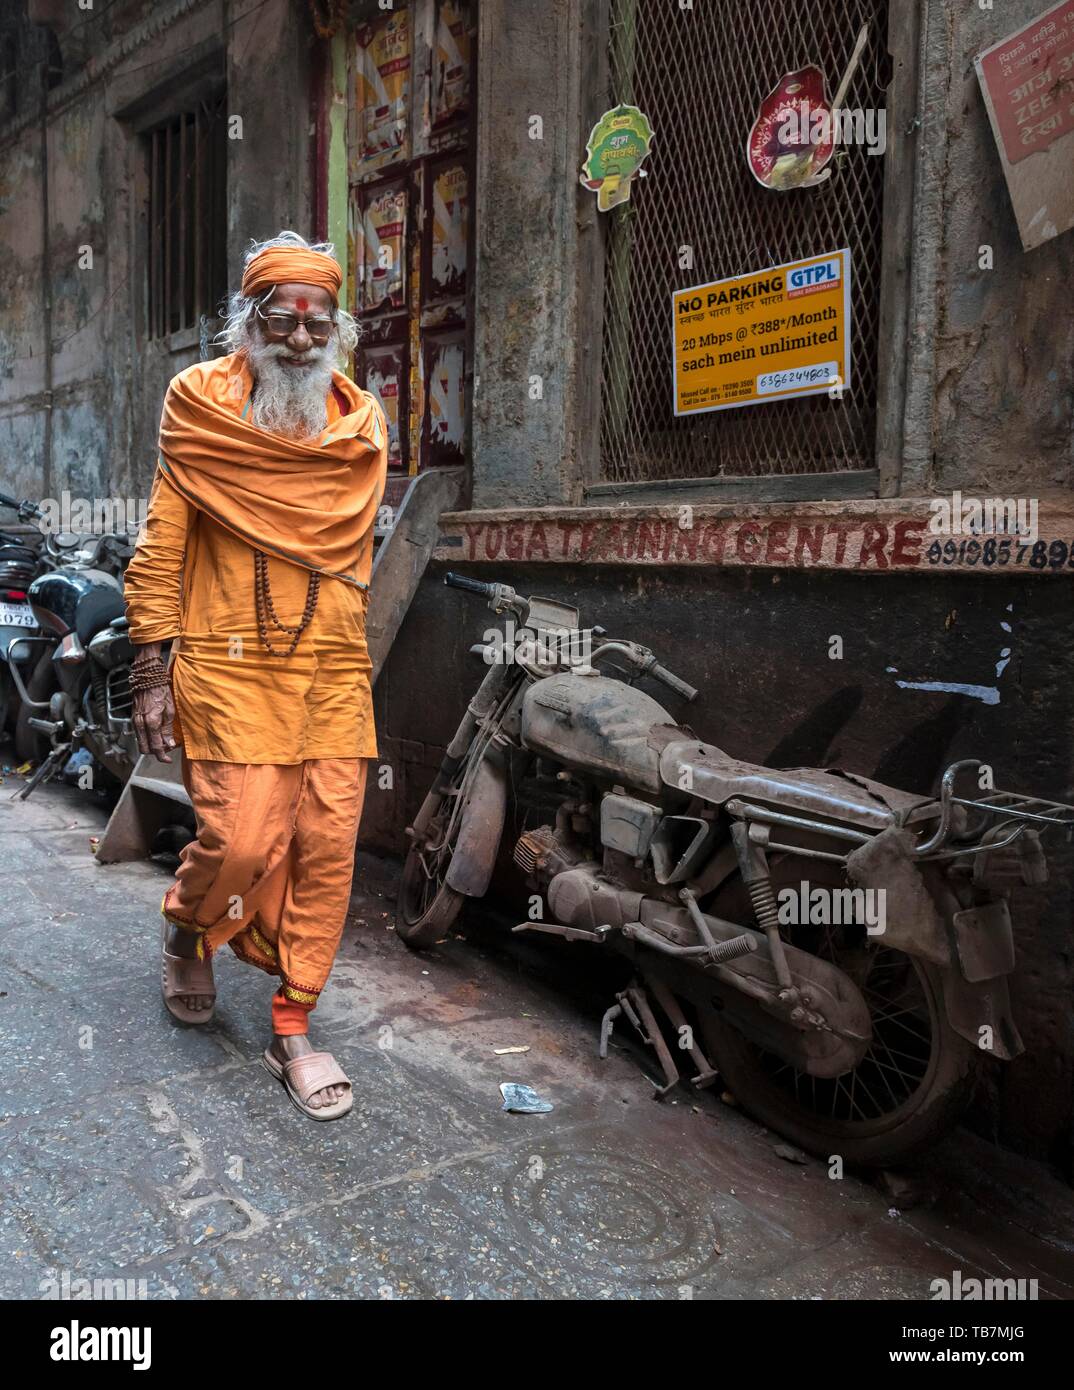 Hindu priest walks pass an abandoned motorcycle in the narrow streets, Old City of Varanasi, Uttar Pradesh, India Stock Photo